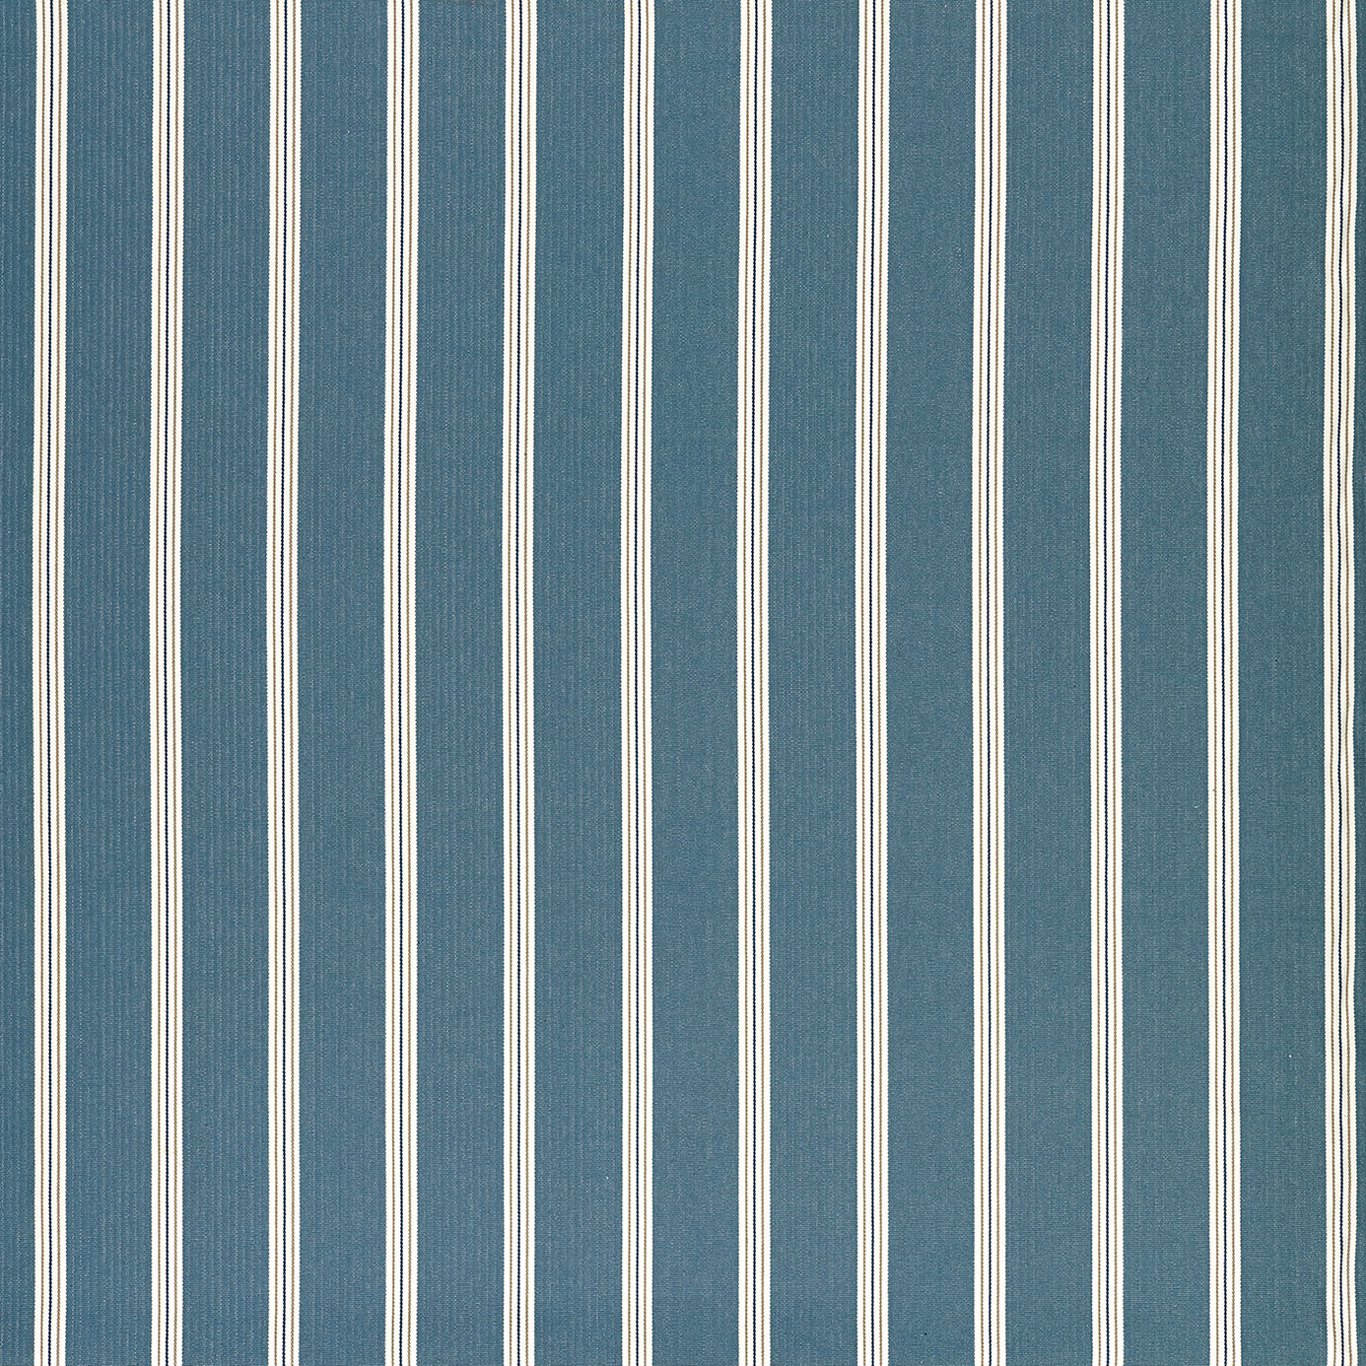 Knightsbridge Denim Fabric by CNC